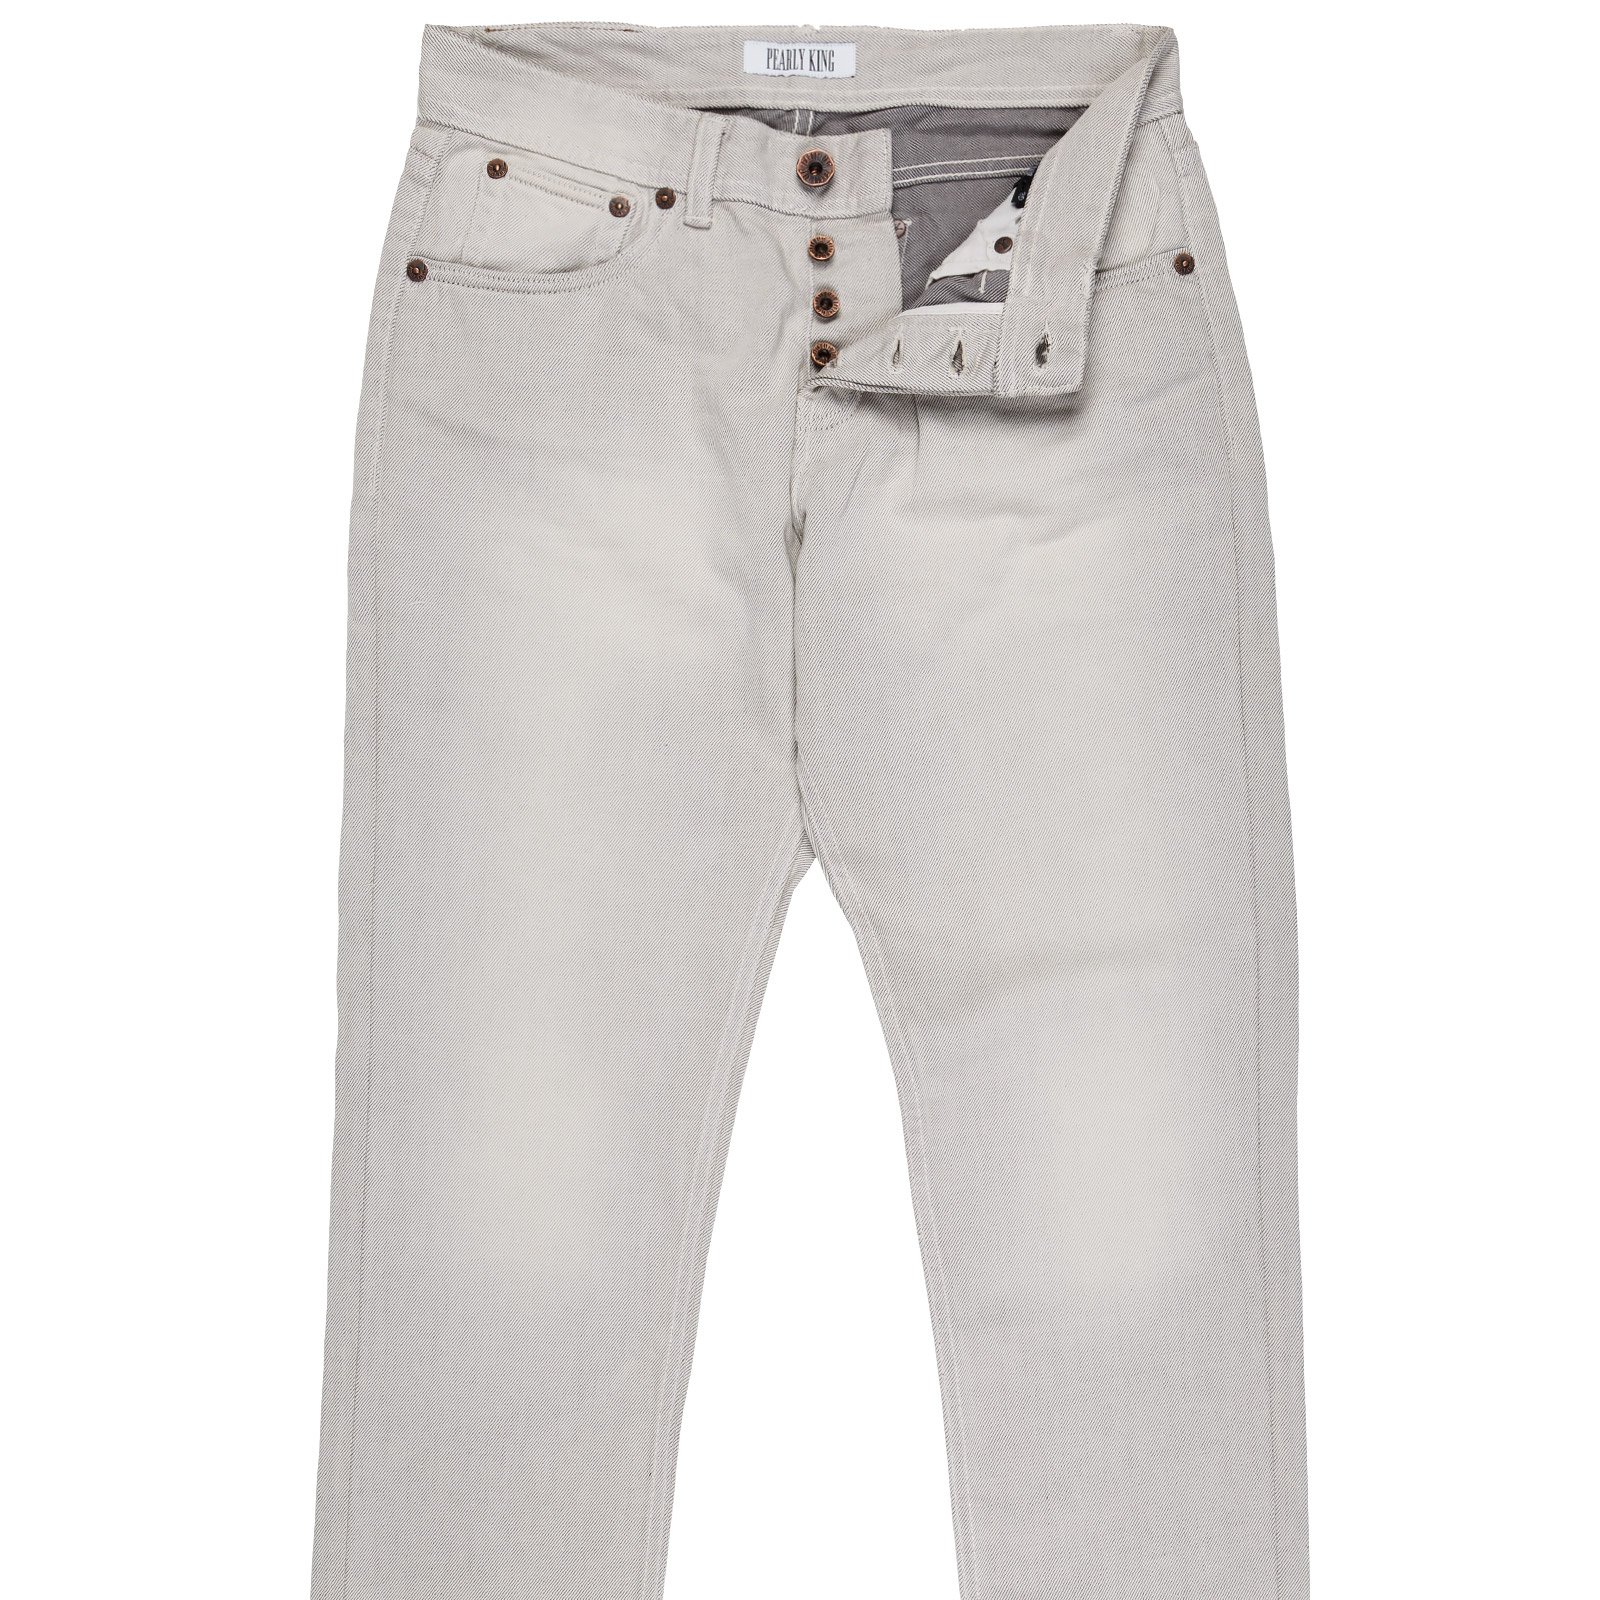 Jagger South Side Ecru Denim Jean - Jeans : FA2 Online Outlet Store ...